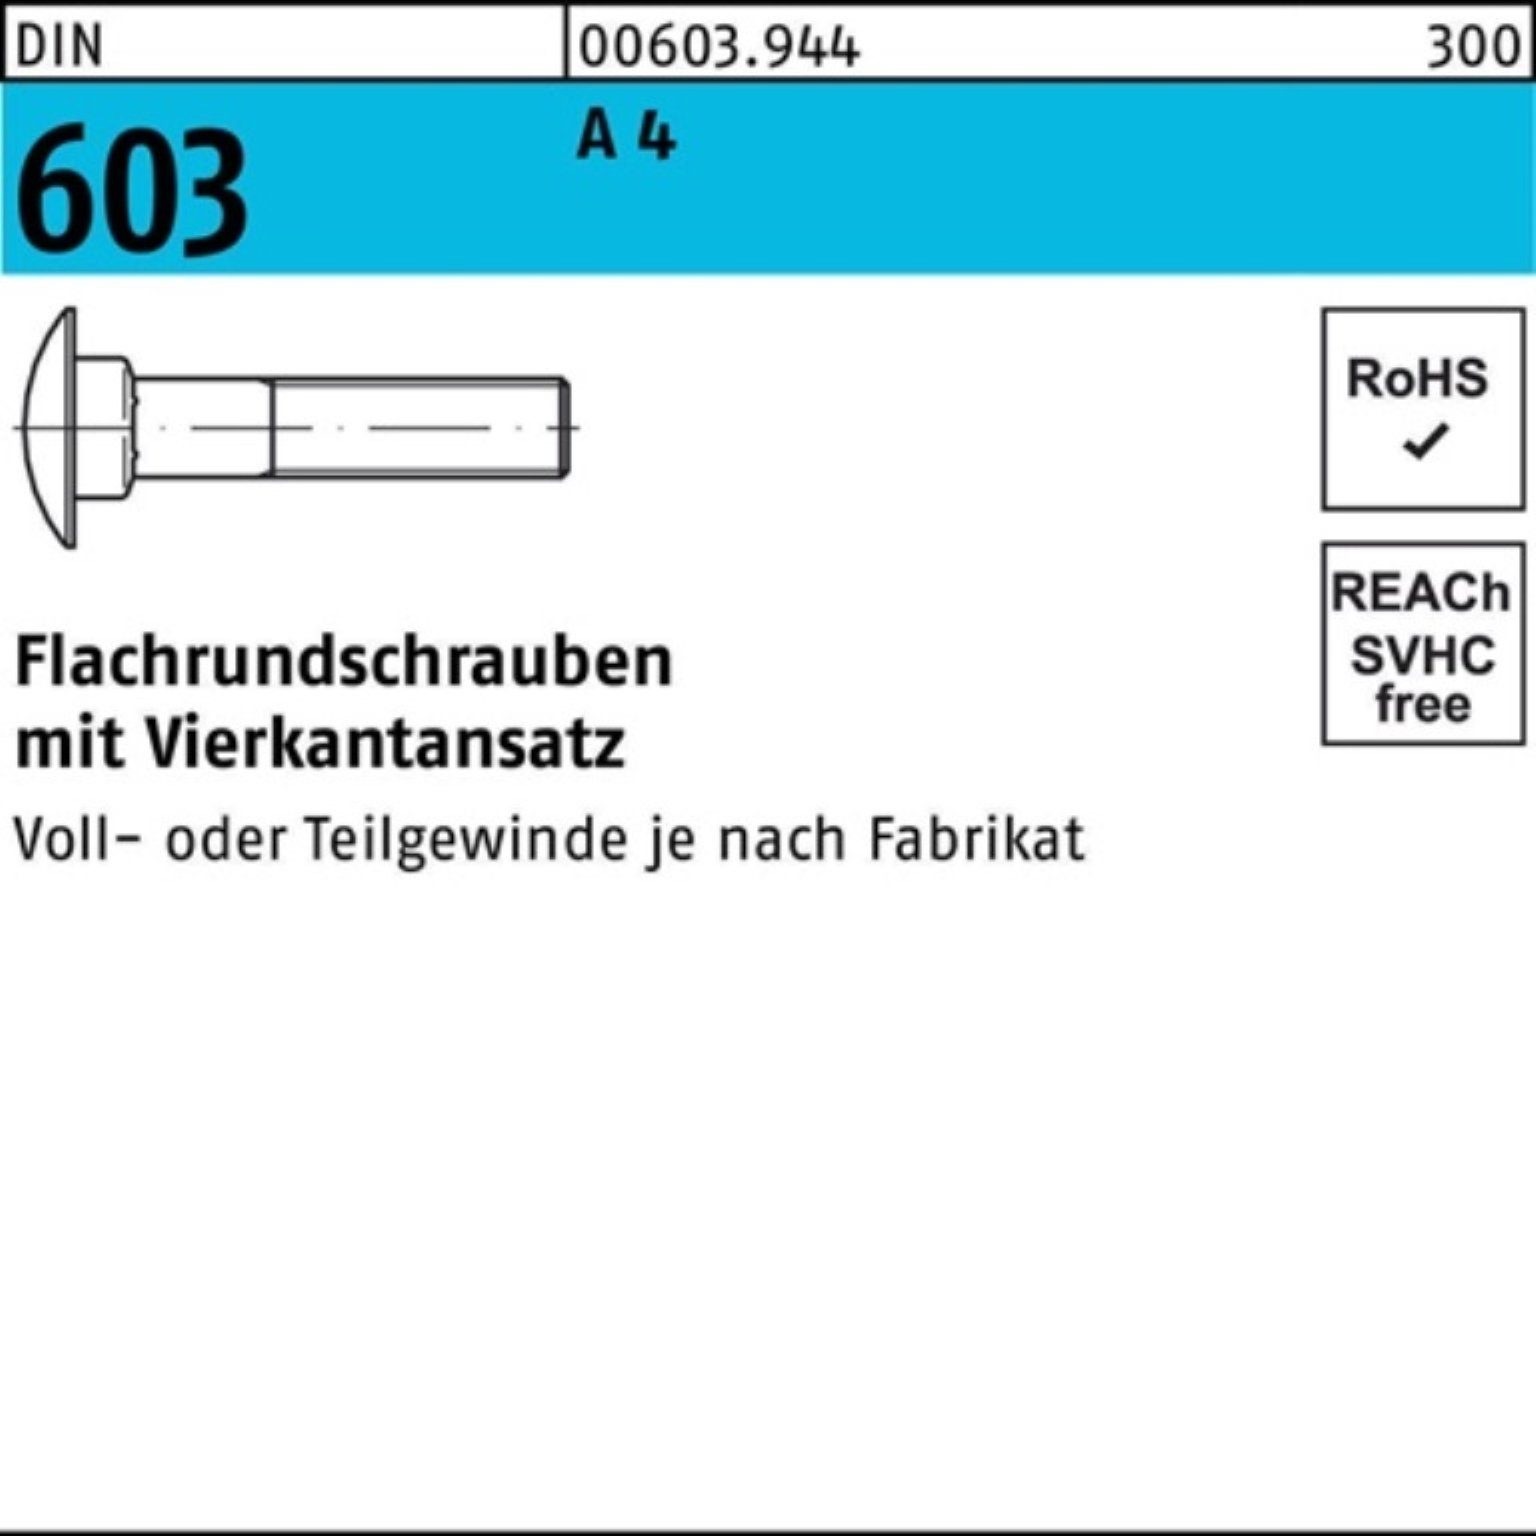 Reyher Schraube 100er Pack Flachrundschraube DIN 603 Vierkantansatz M10x 45 A 4 10 St